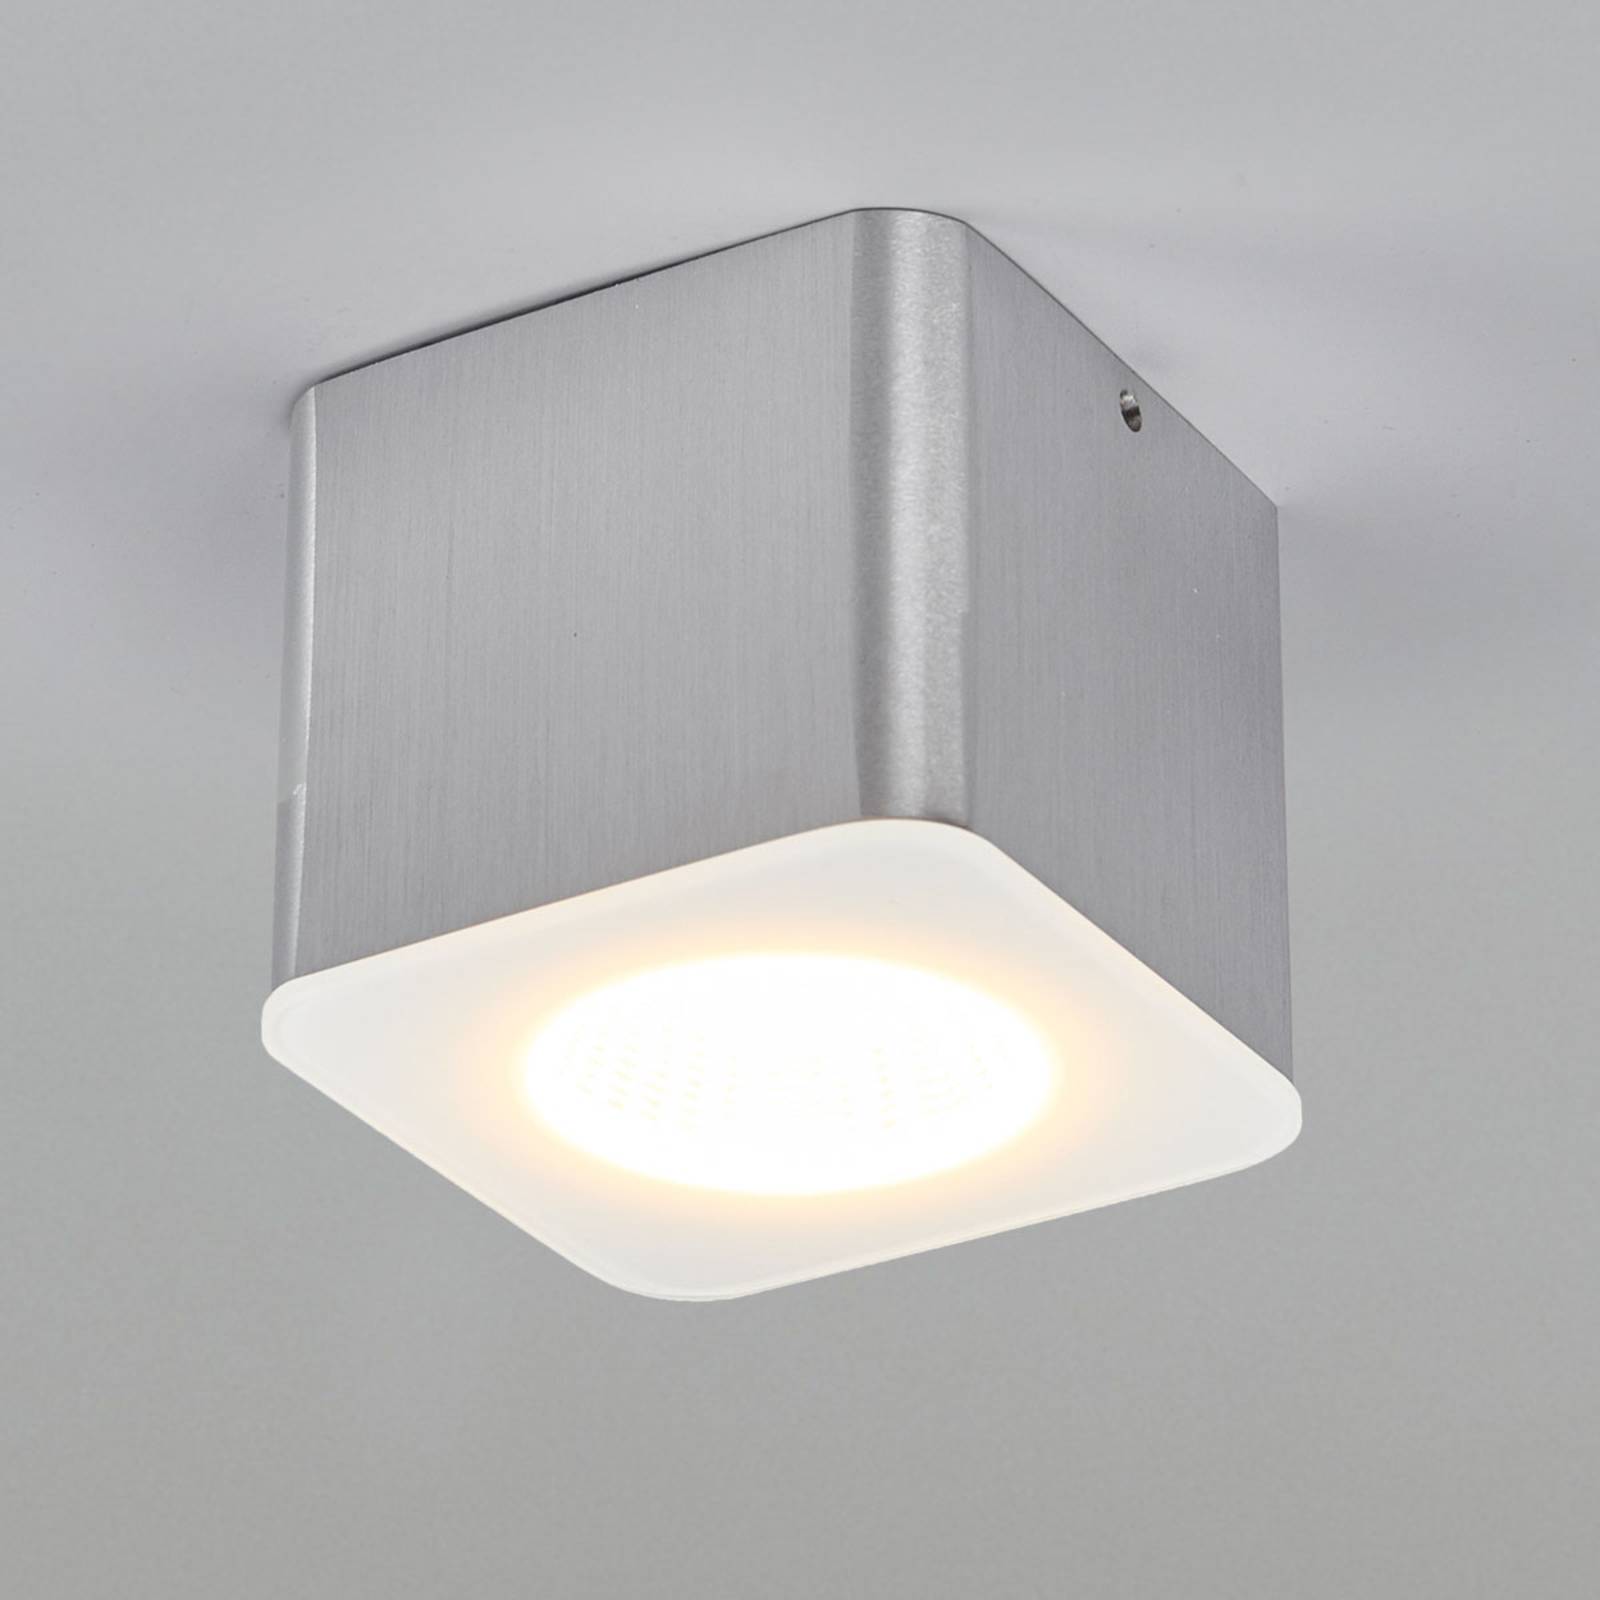 Image of Helestra Oso spot plafond LED, angulaire, alu mat 4022671100946